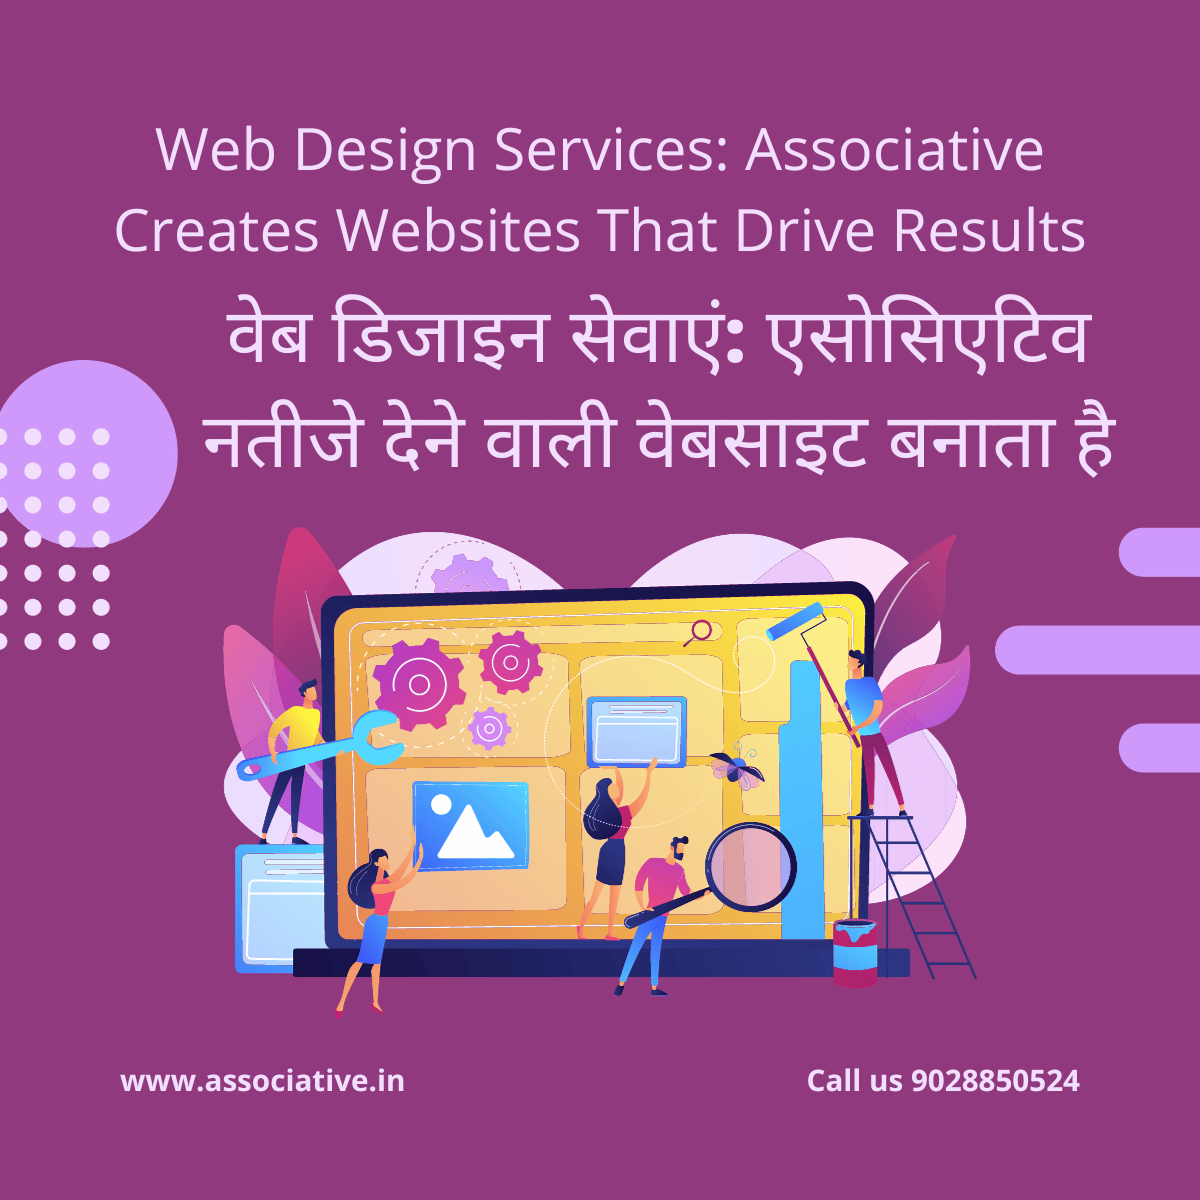 Web Design Services: Associative Creates Websites That Drive Results